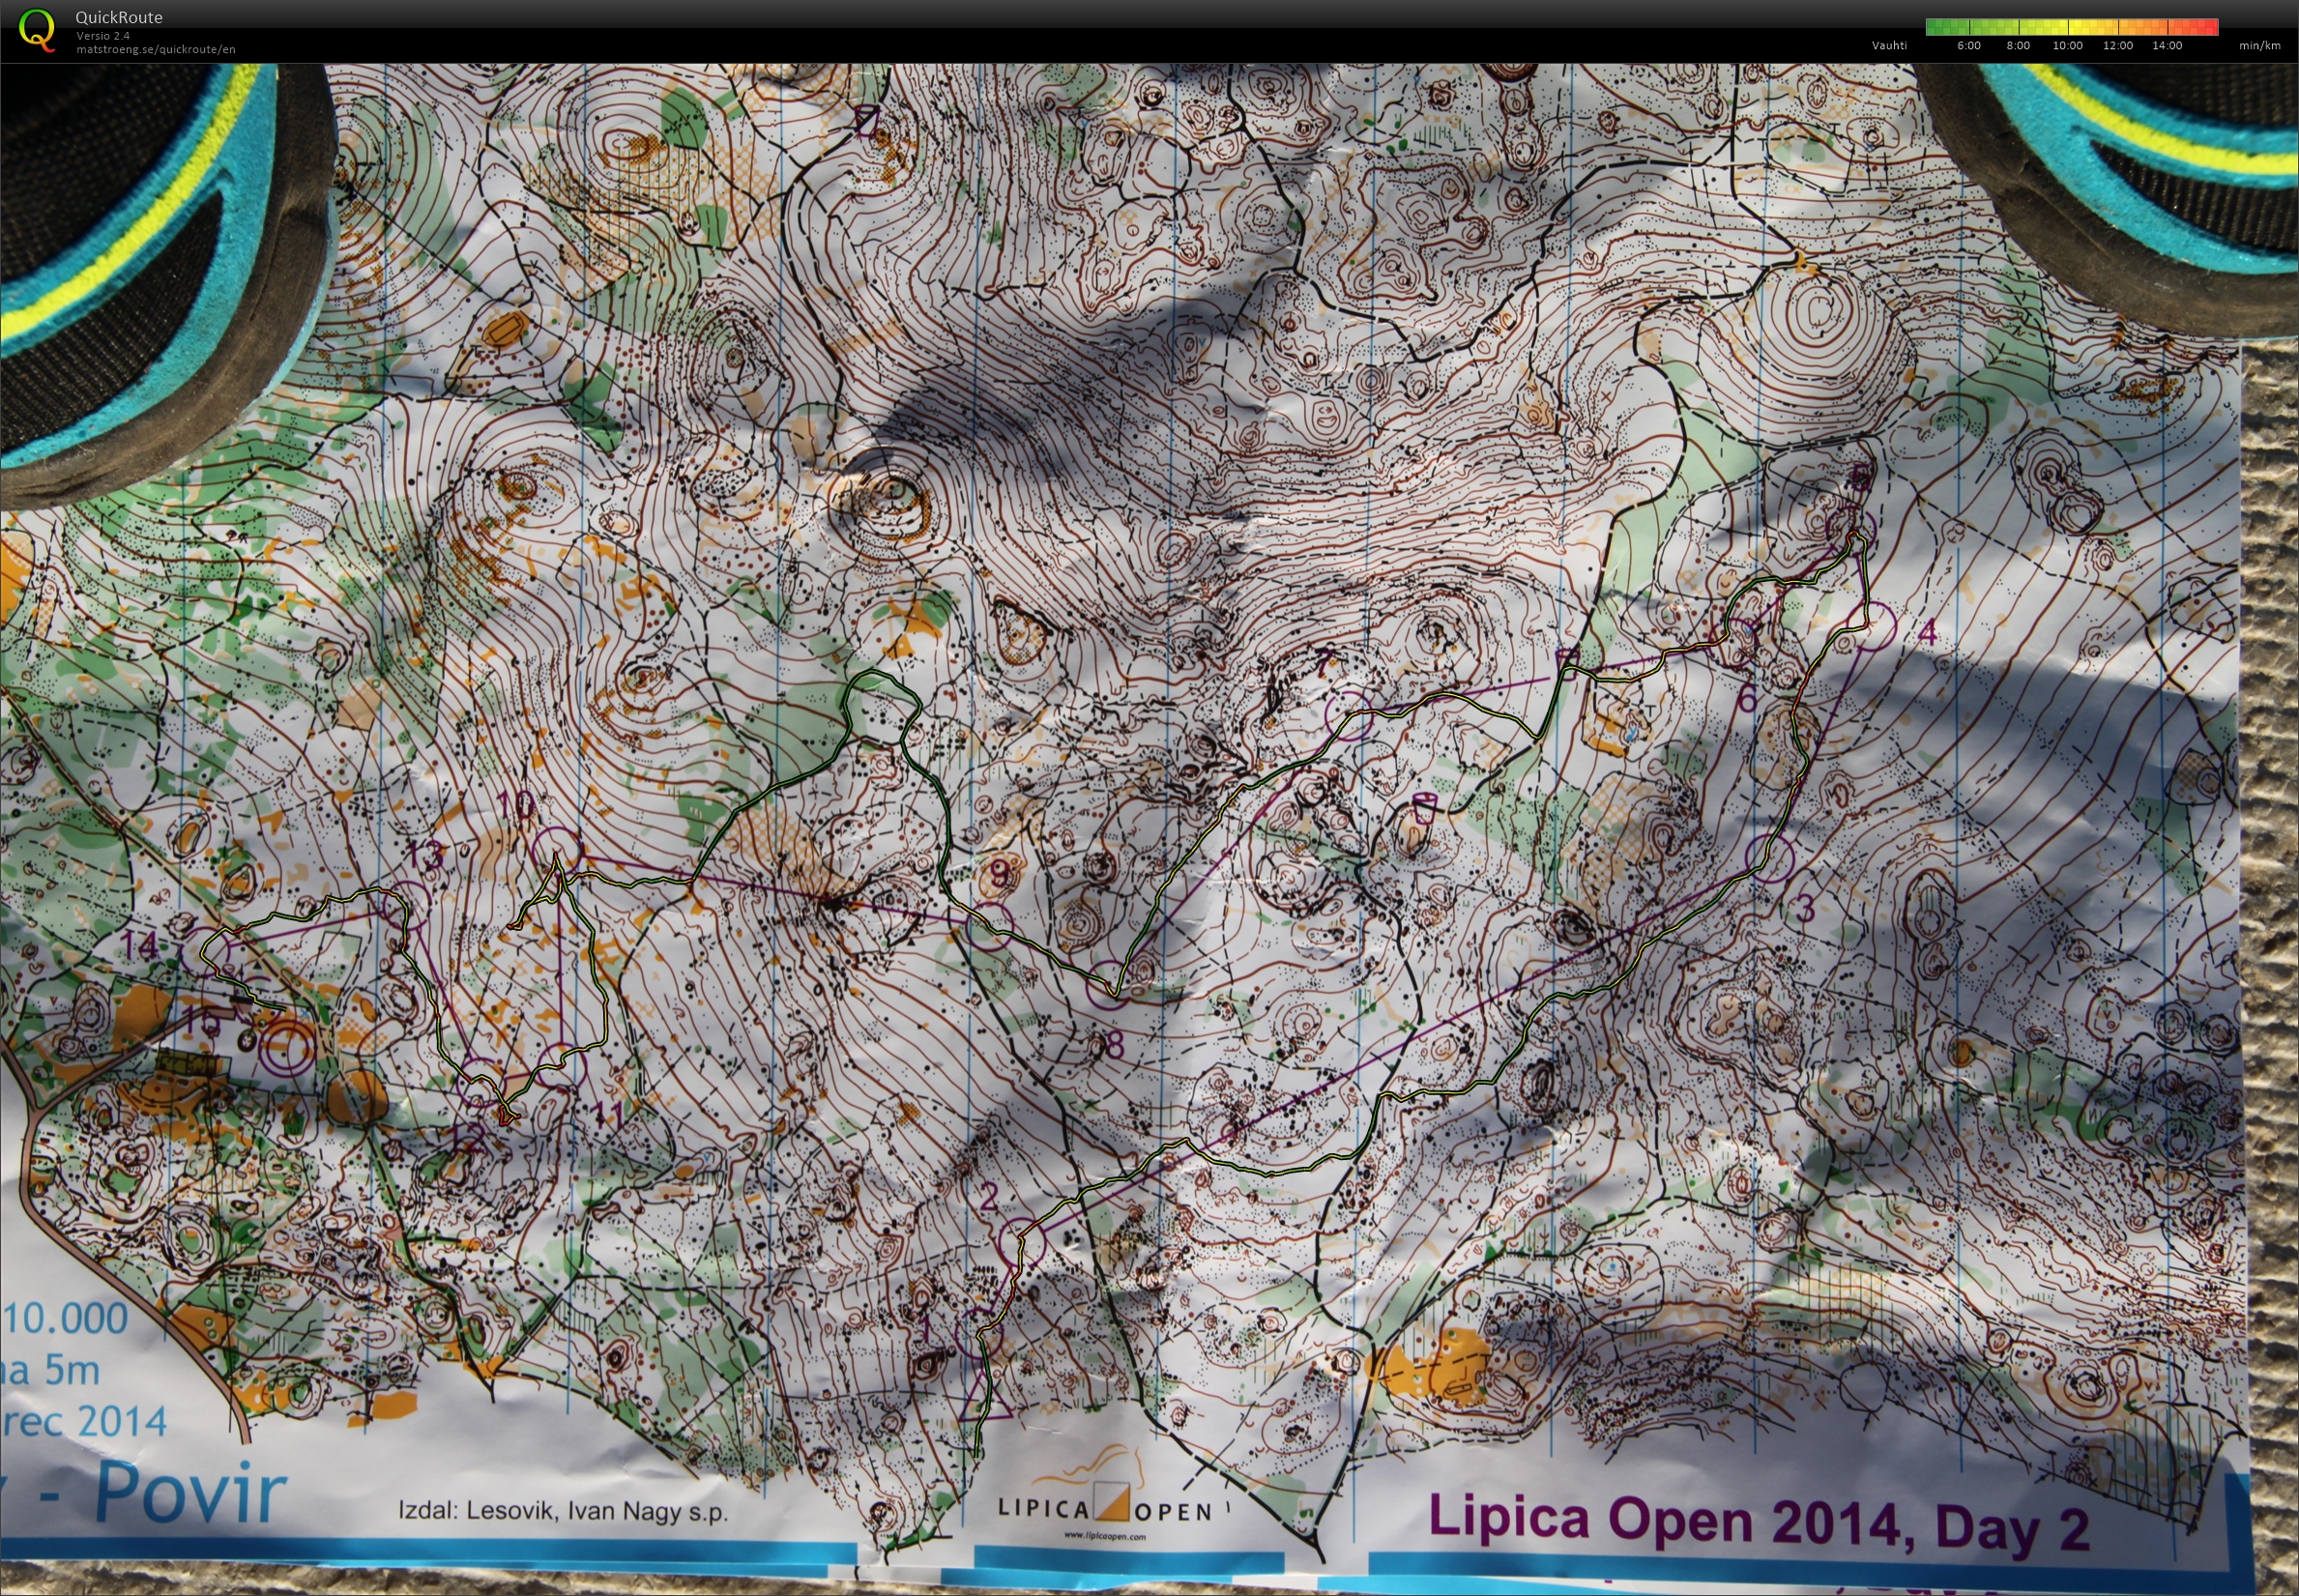 Lipica open 2 (09.03.2014)